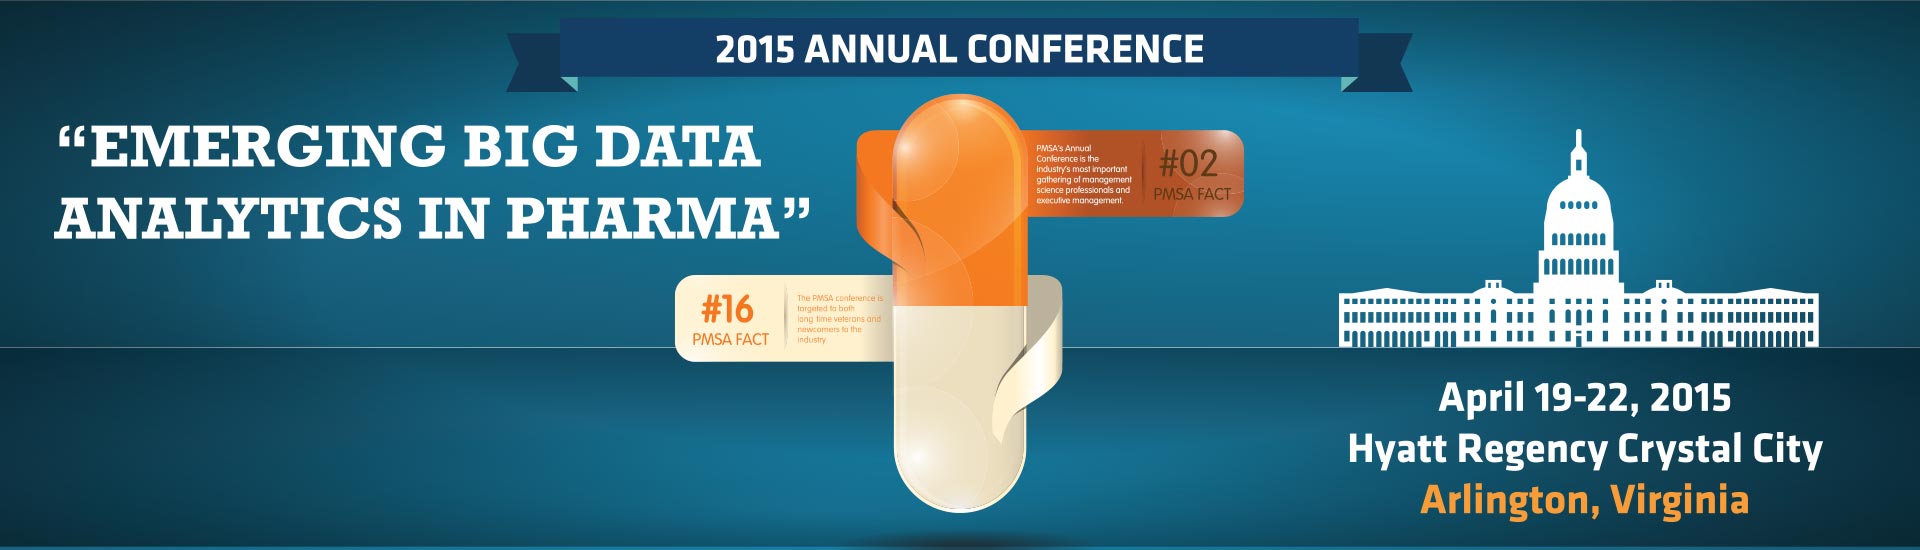 2015 Annual Conference • Arlington, Virginia • April 19-22